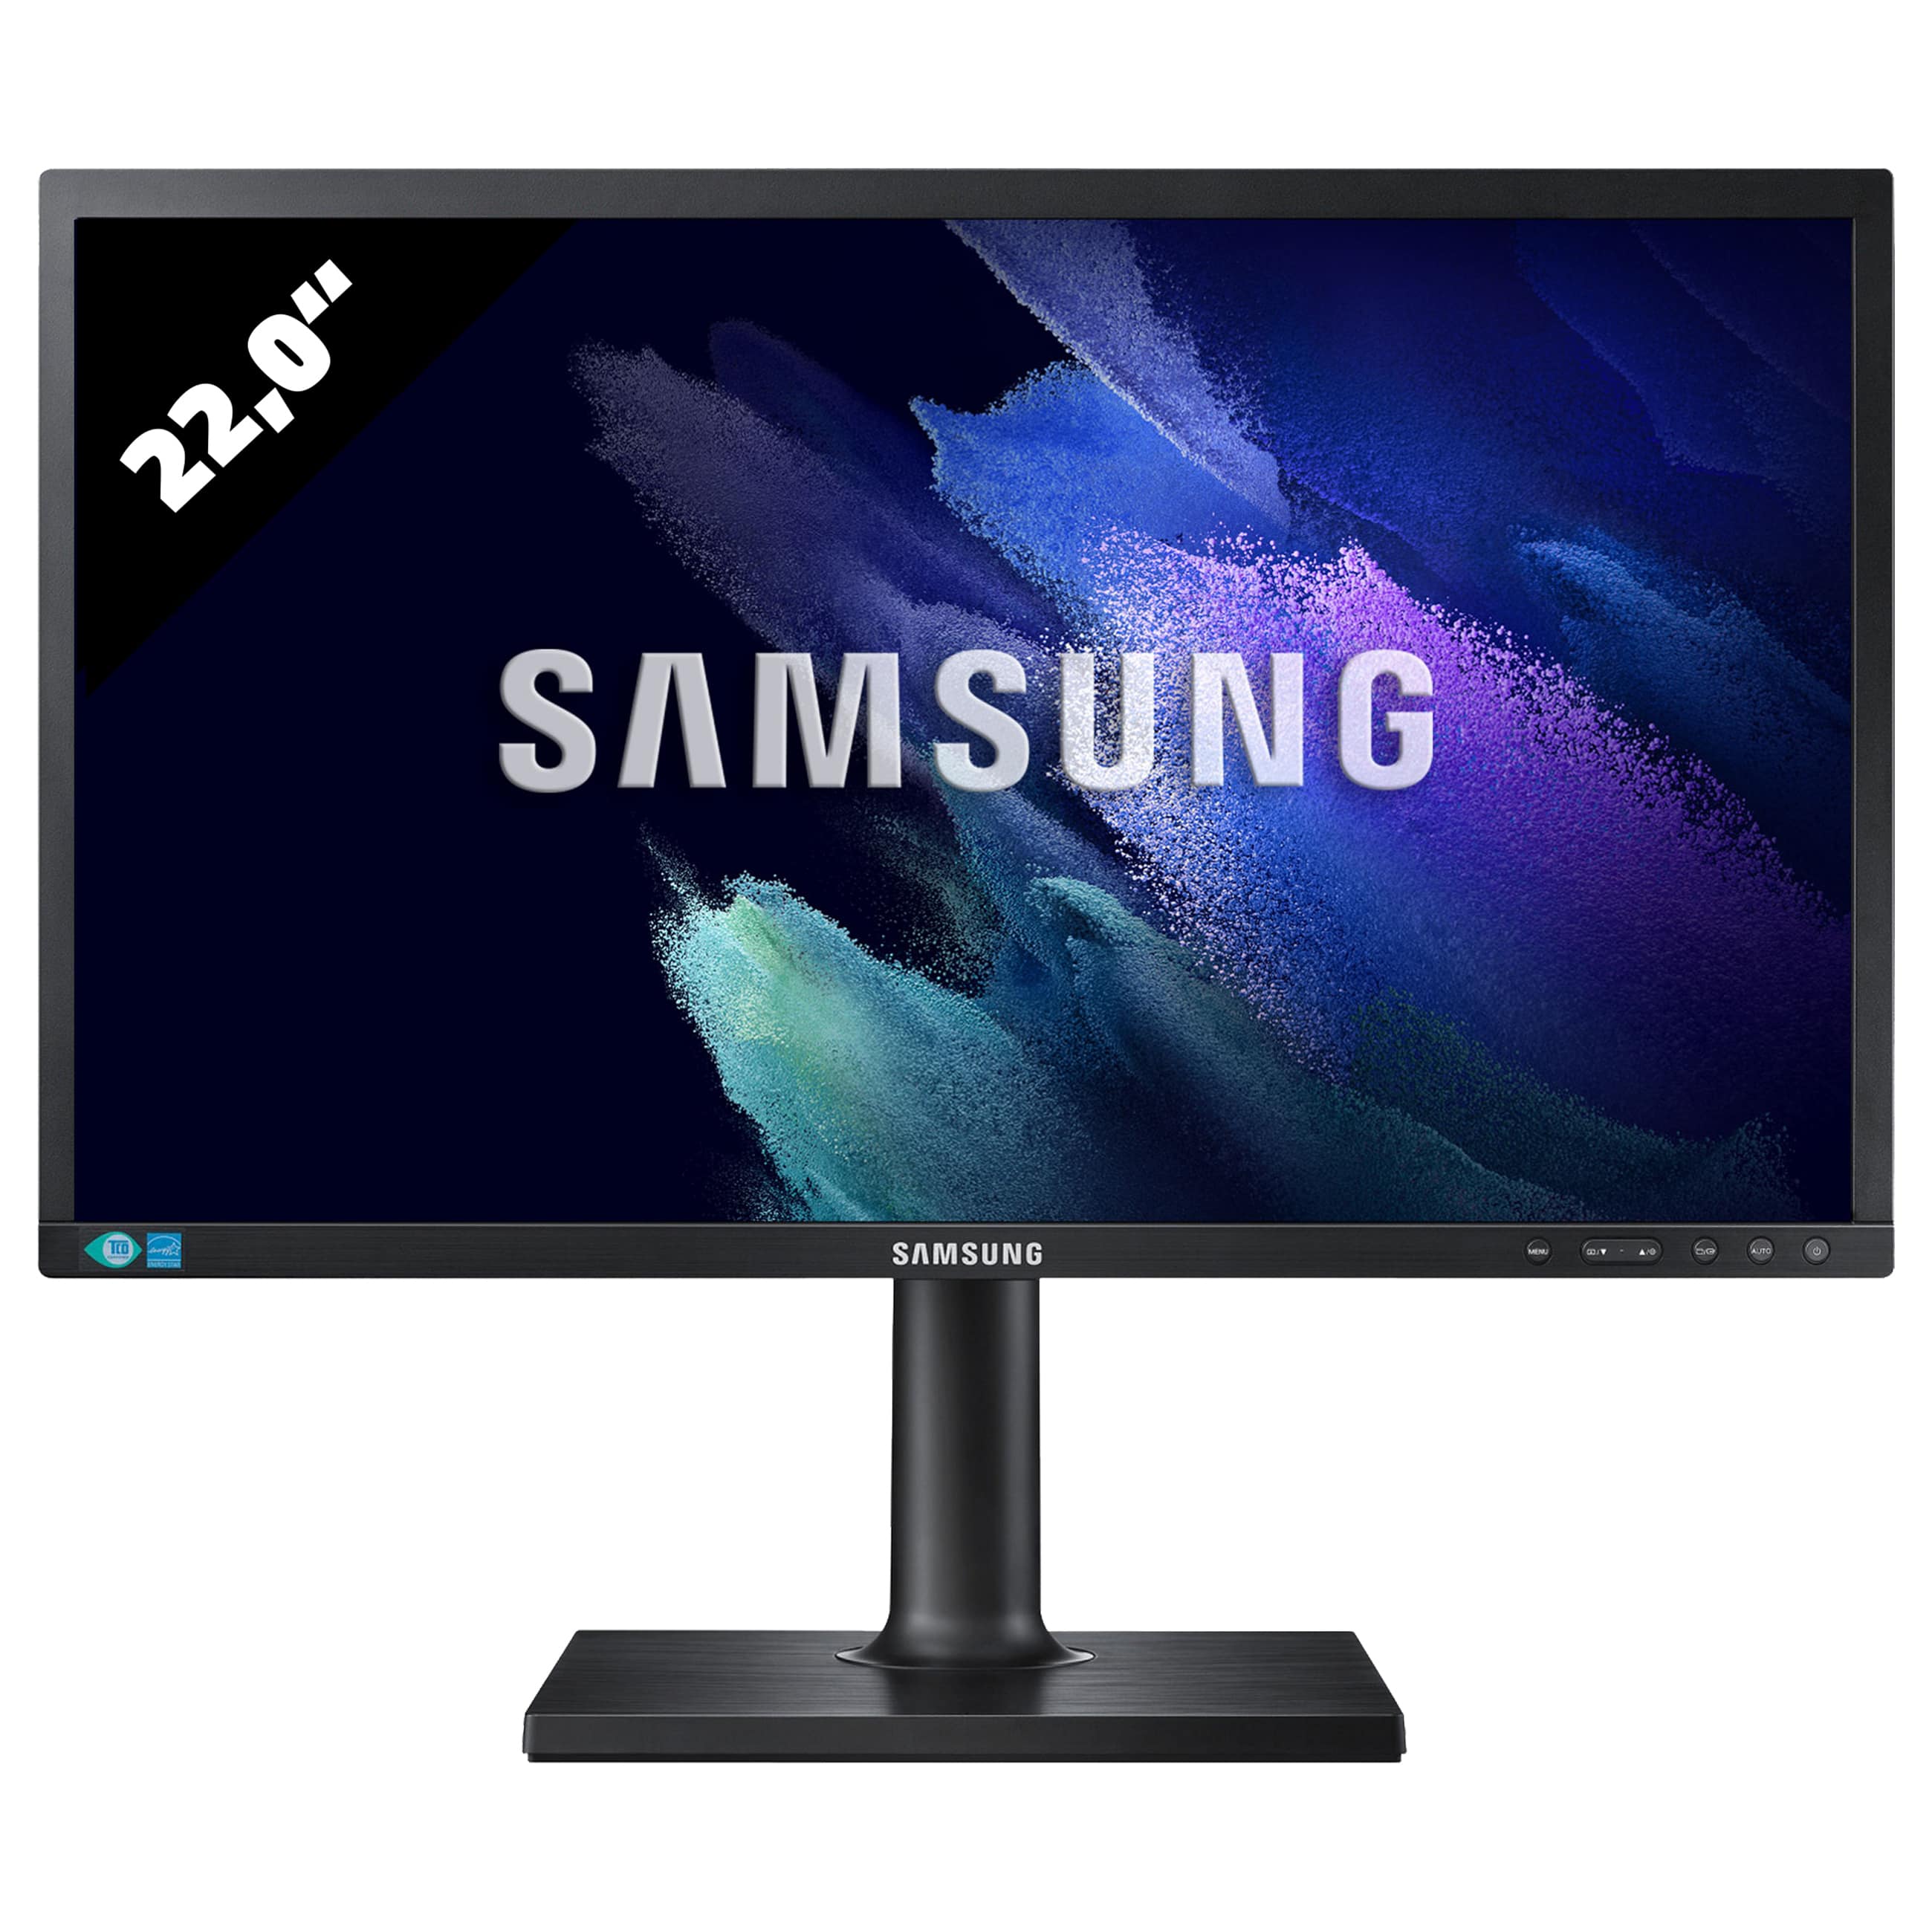 Samsung Color Display S22E450MW - 22,0 Zoll - 1680 x 1050 WSXGA+ - 5 ms - Schwarz